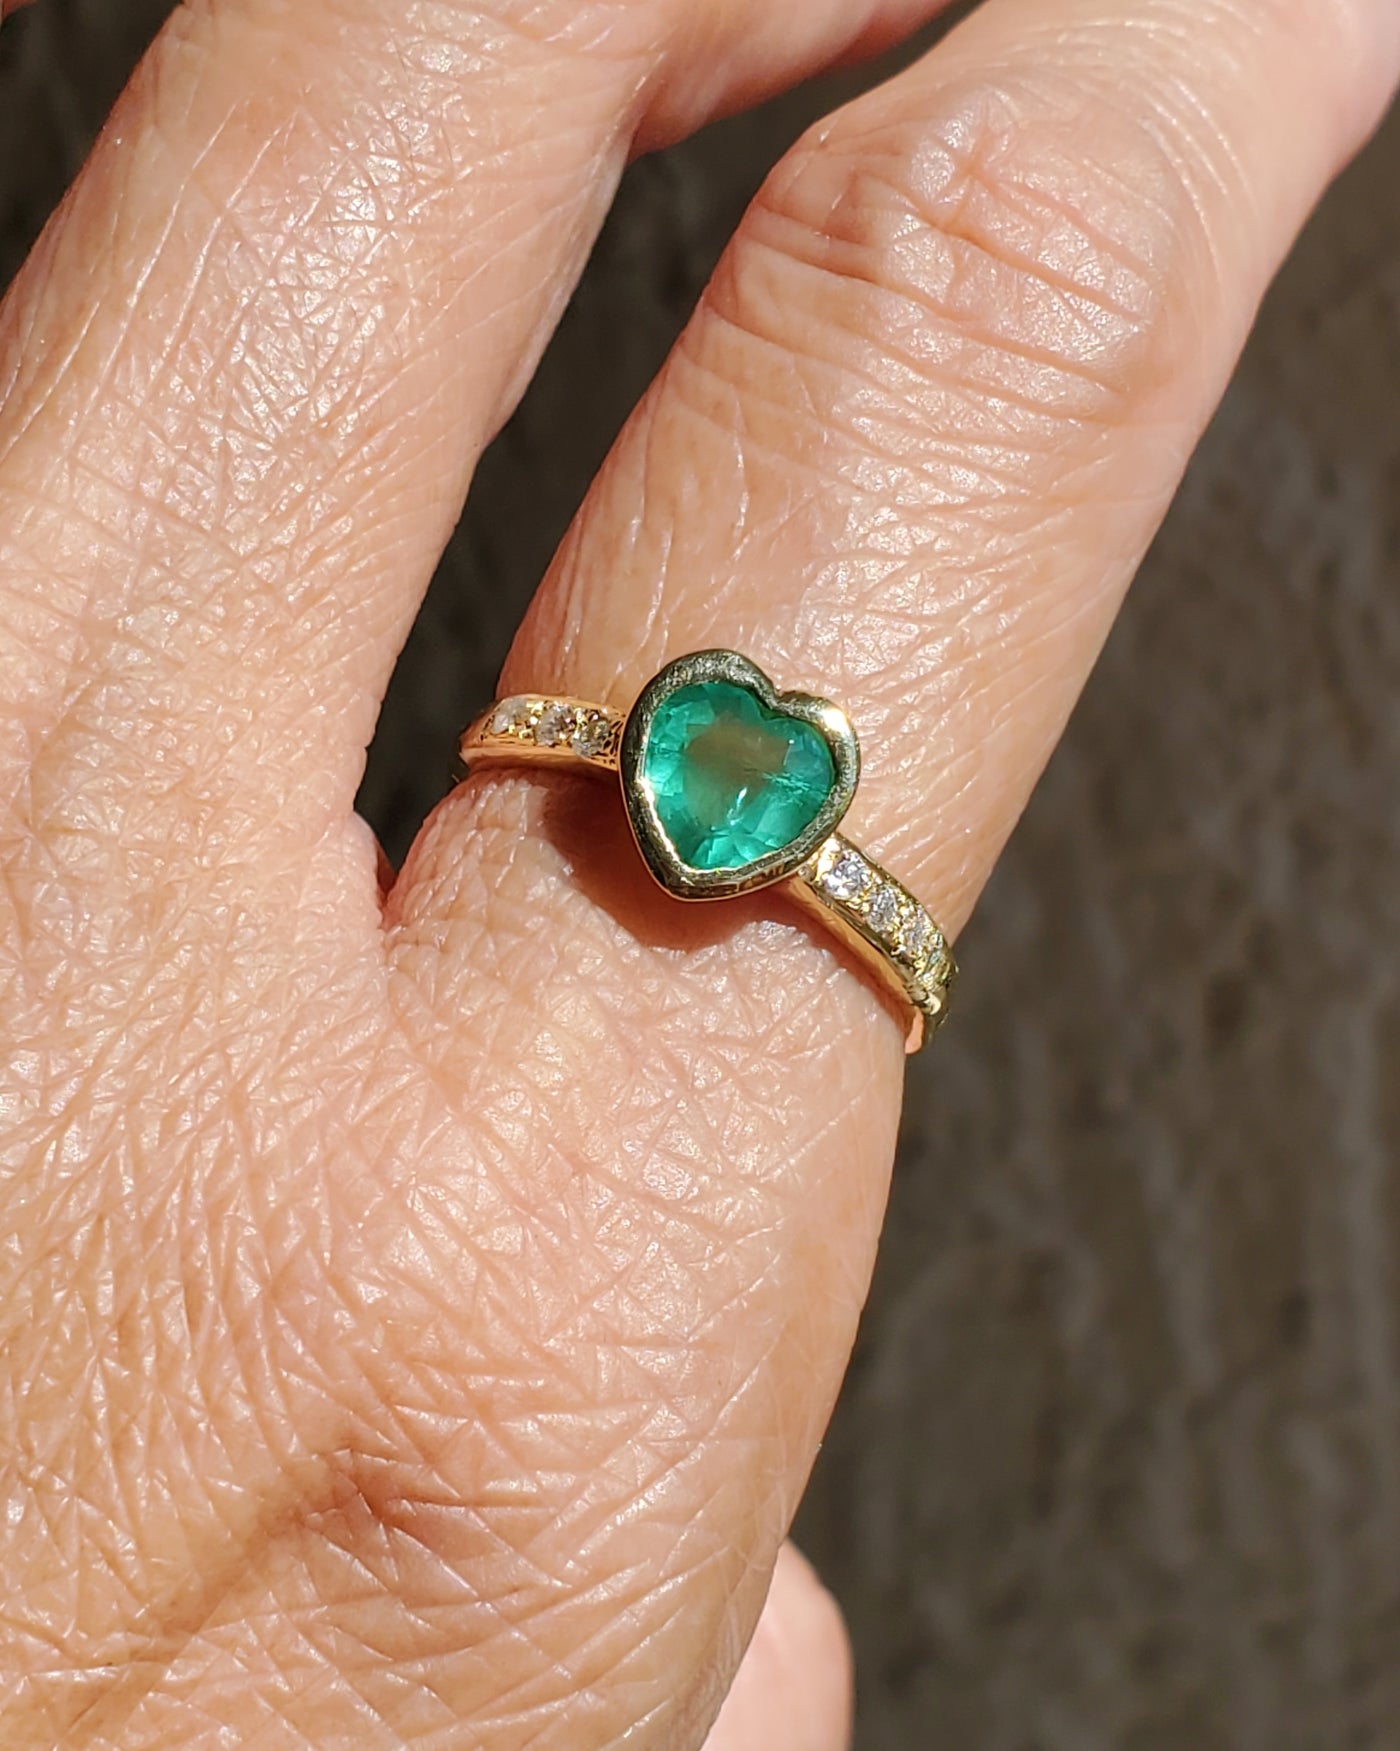 Petite Emerald Love Heart Ring II